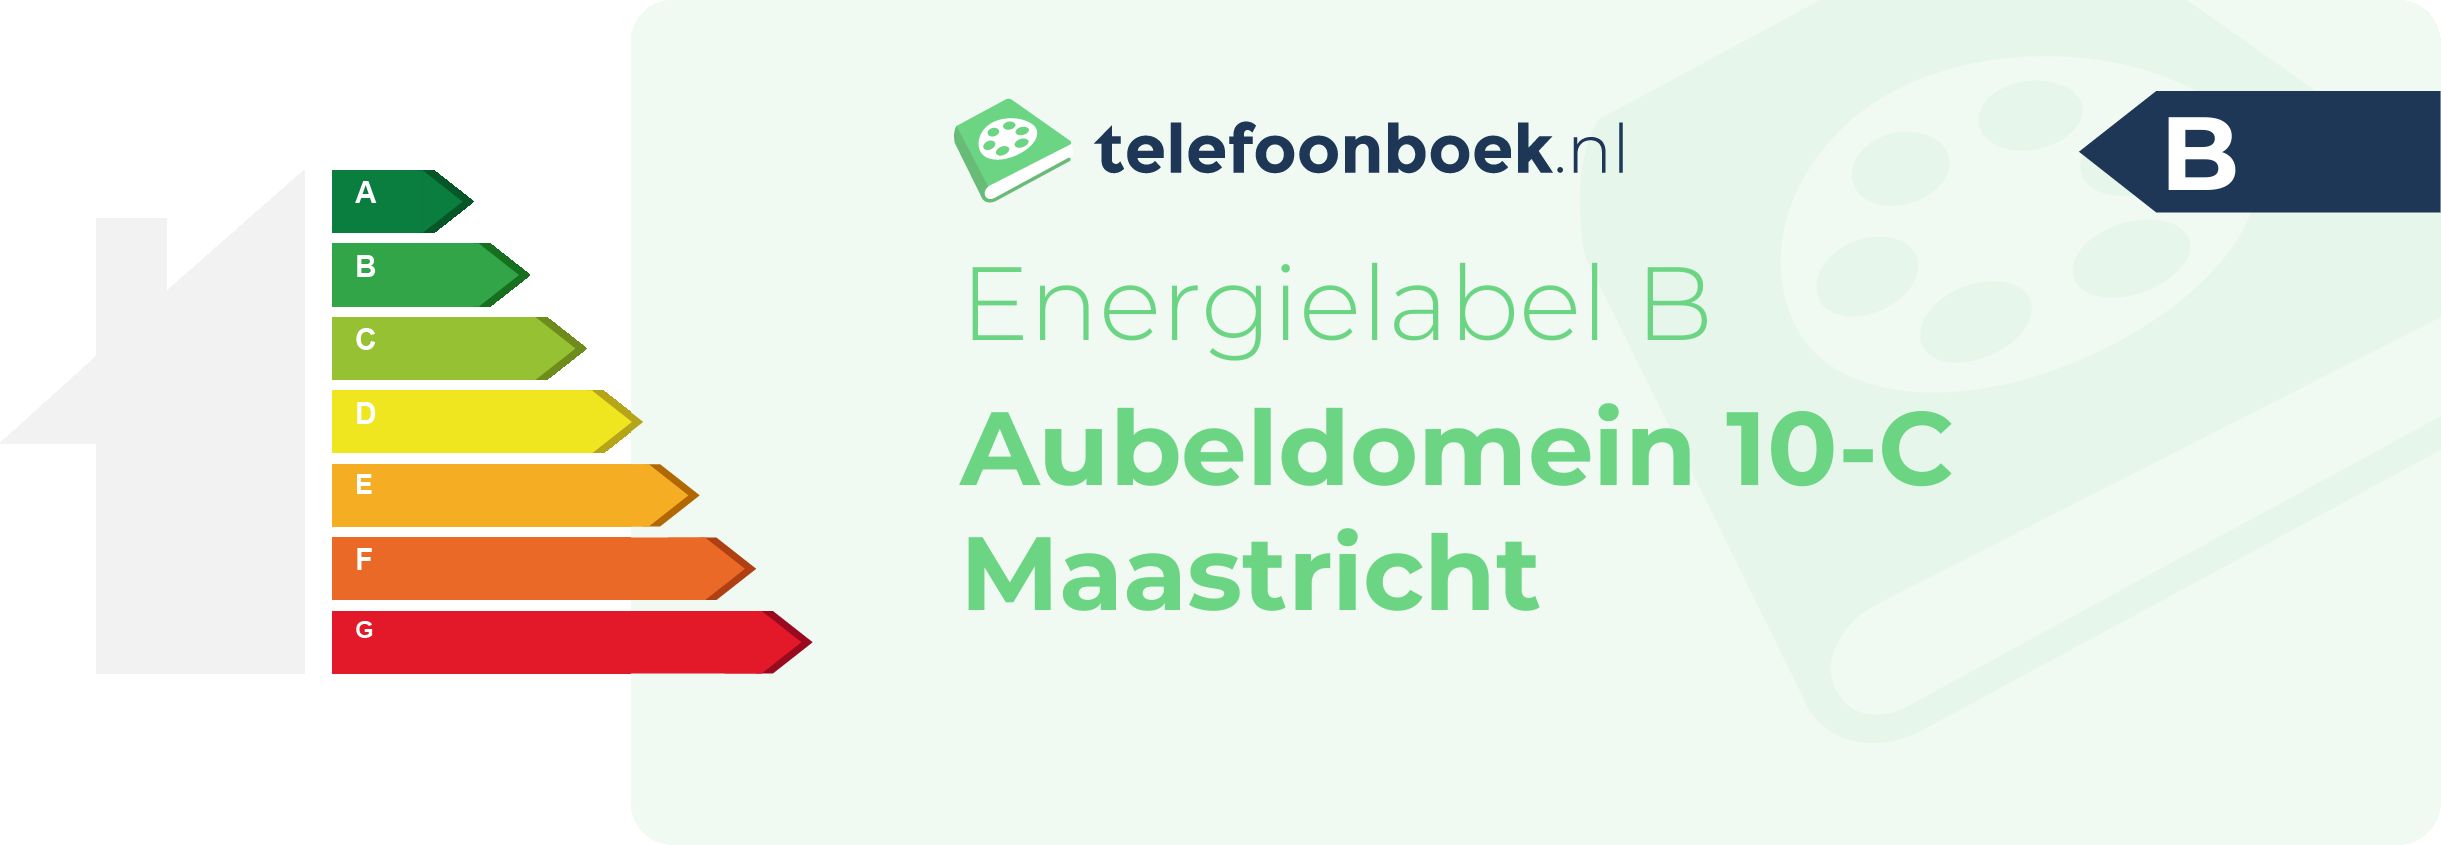 Energielabel Aubeldomein 10-C Maastricht